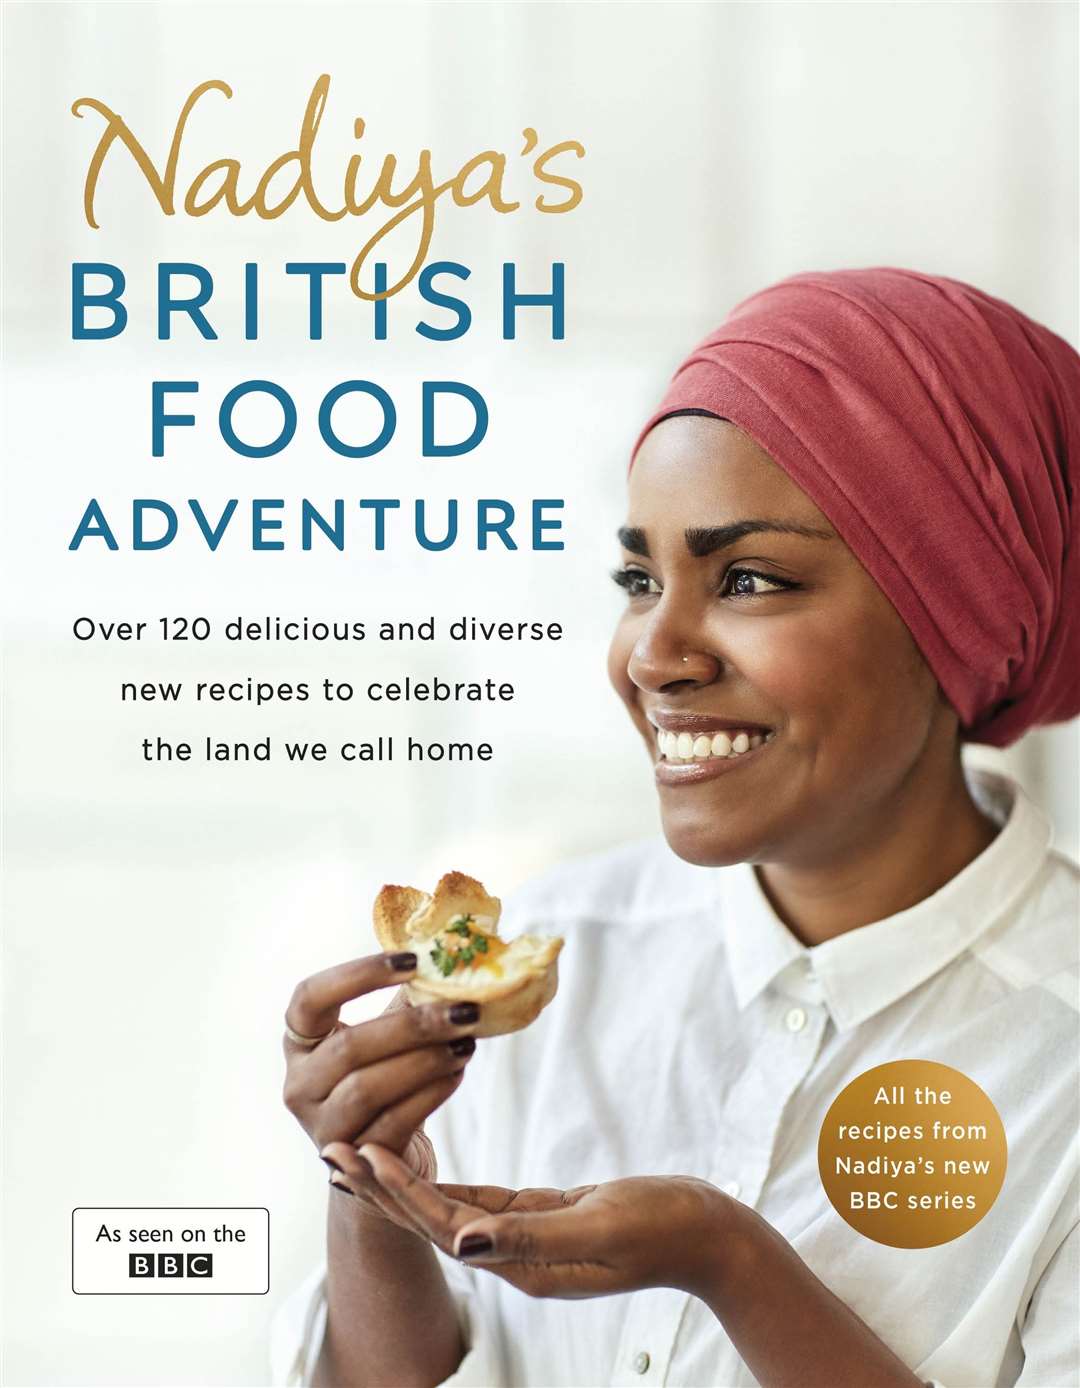 Nadiya's British Food Adventure by Nadiya Hussain is published by Michael Joseph, priced £20